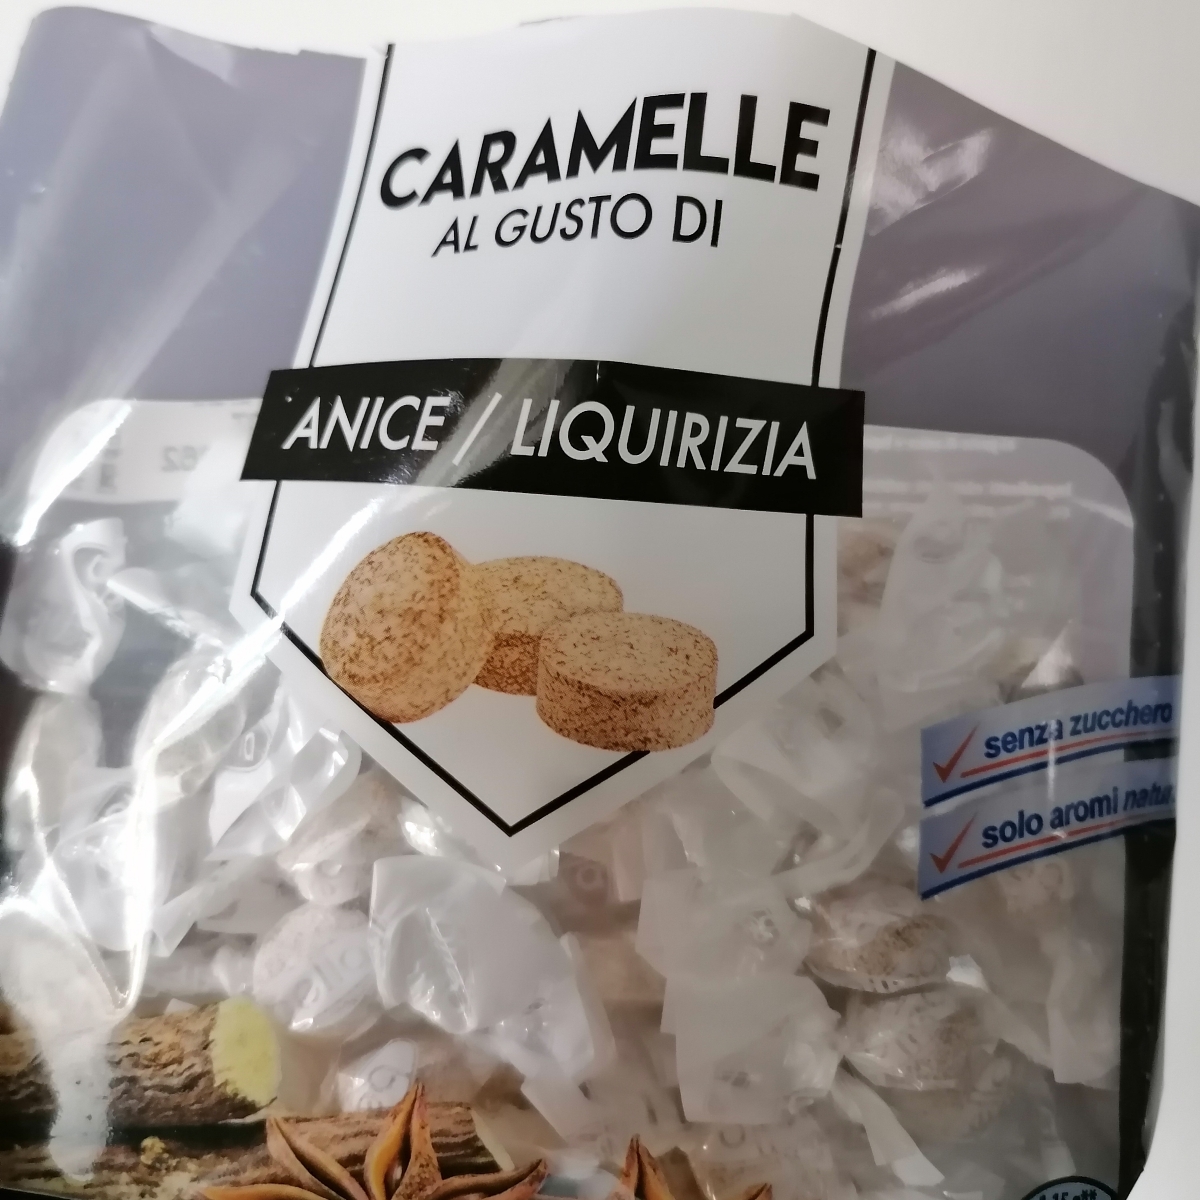 Bella Caramelle anice/liquirizia Reviews | abillion